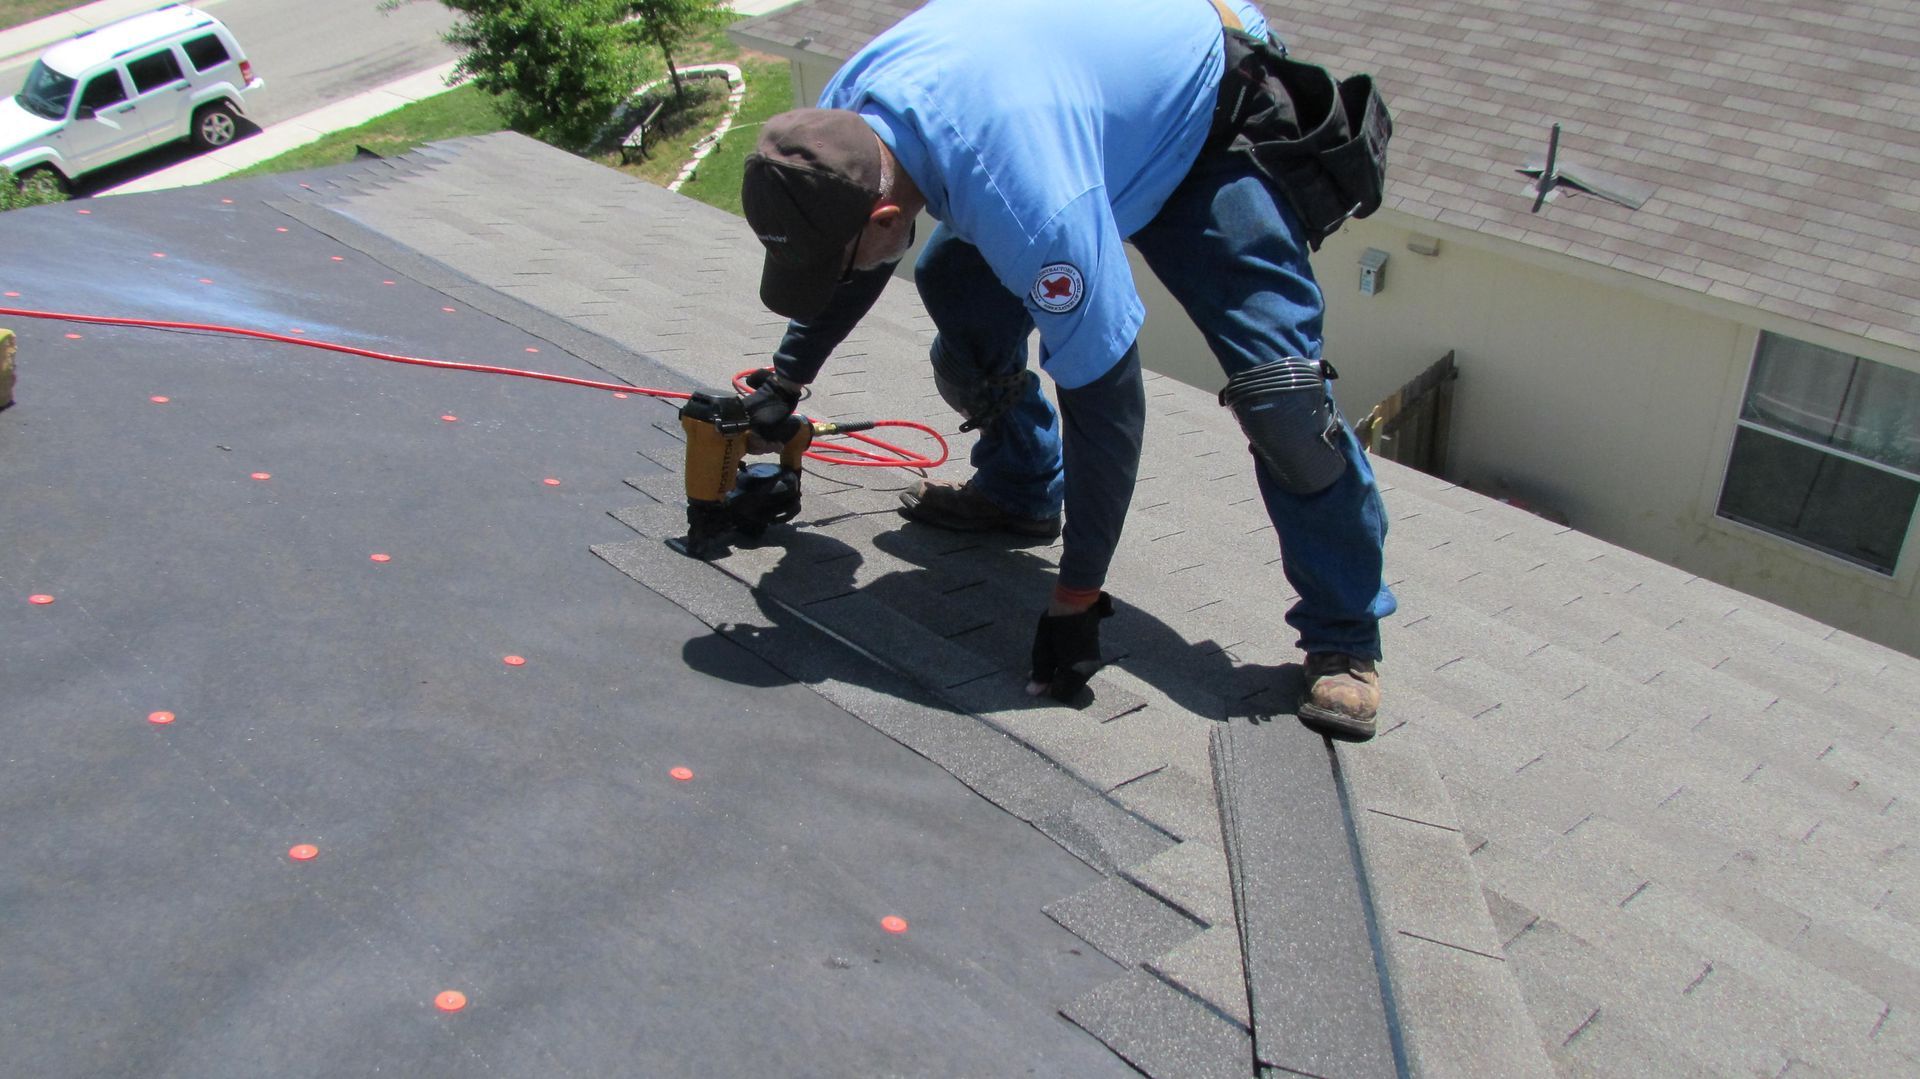 Installing Asphalt Shingle Roof